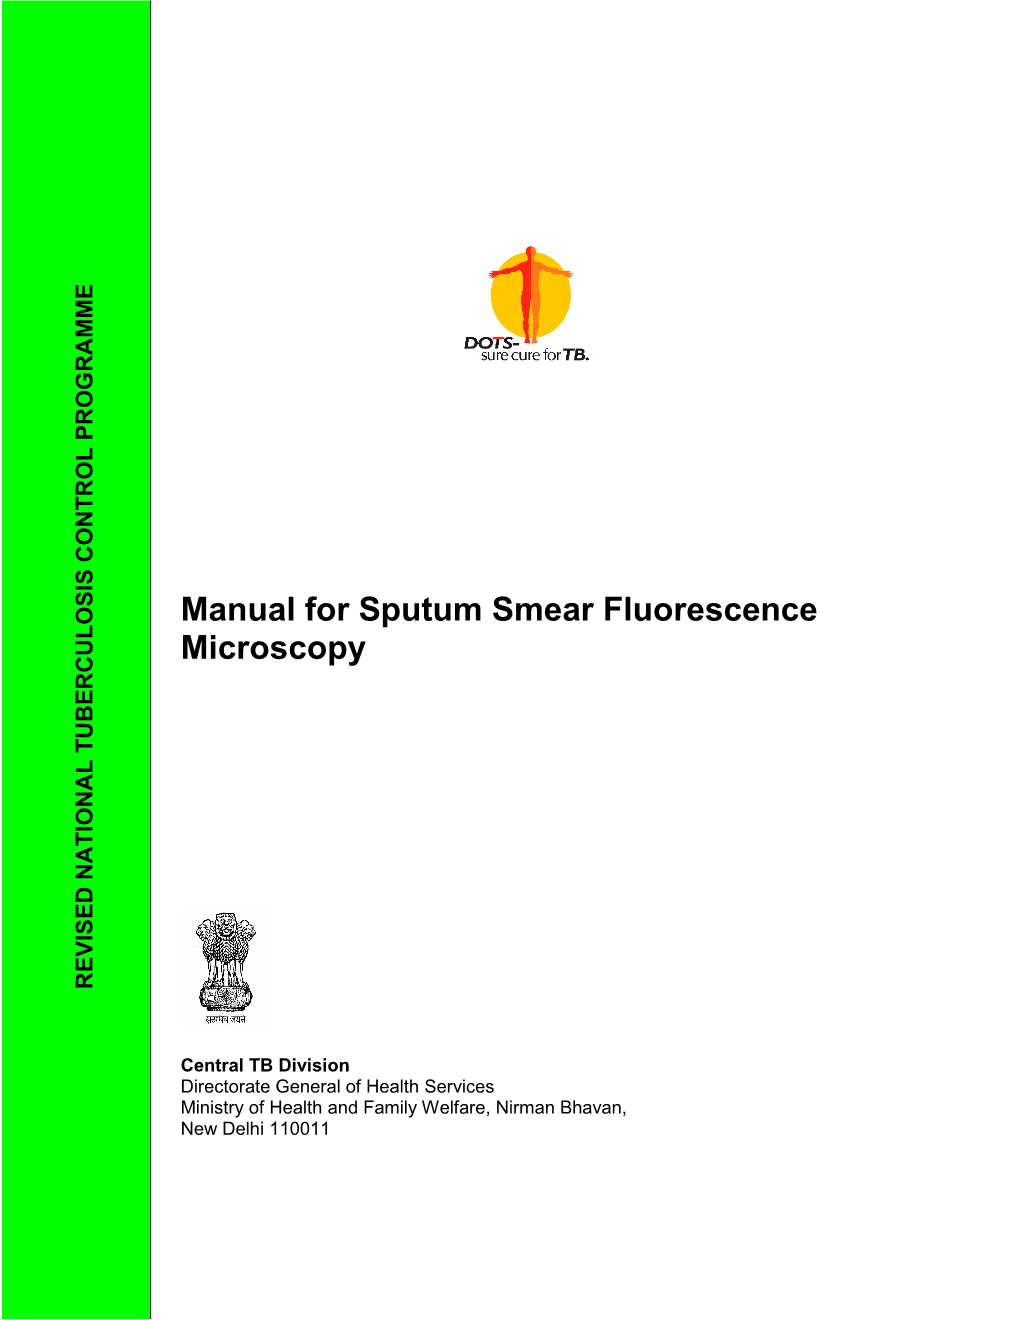 Manual for Sputum Smear Fluorescence Microscopy